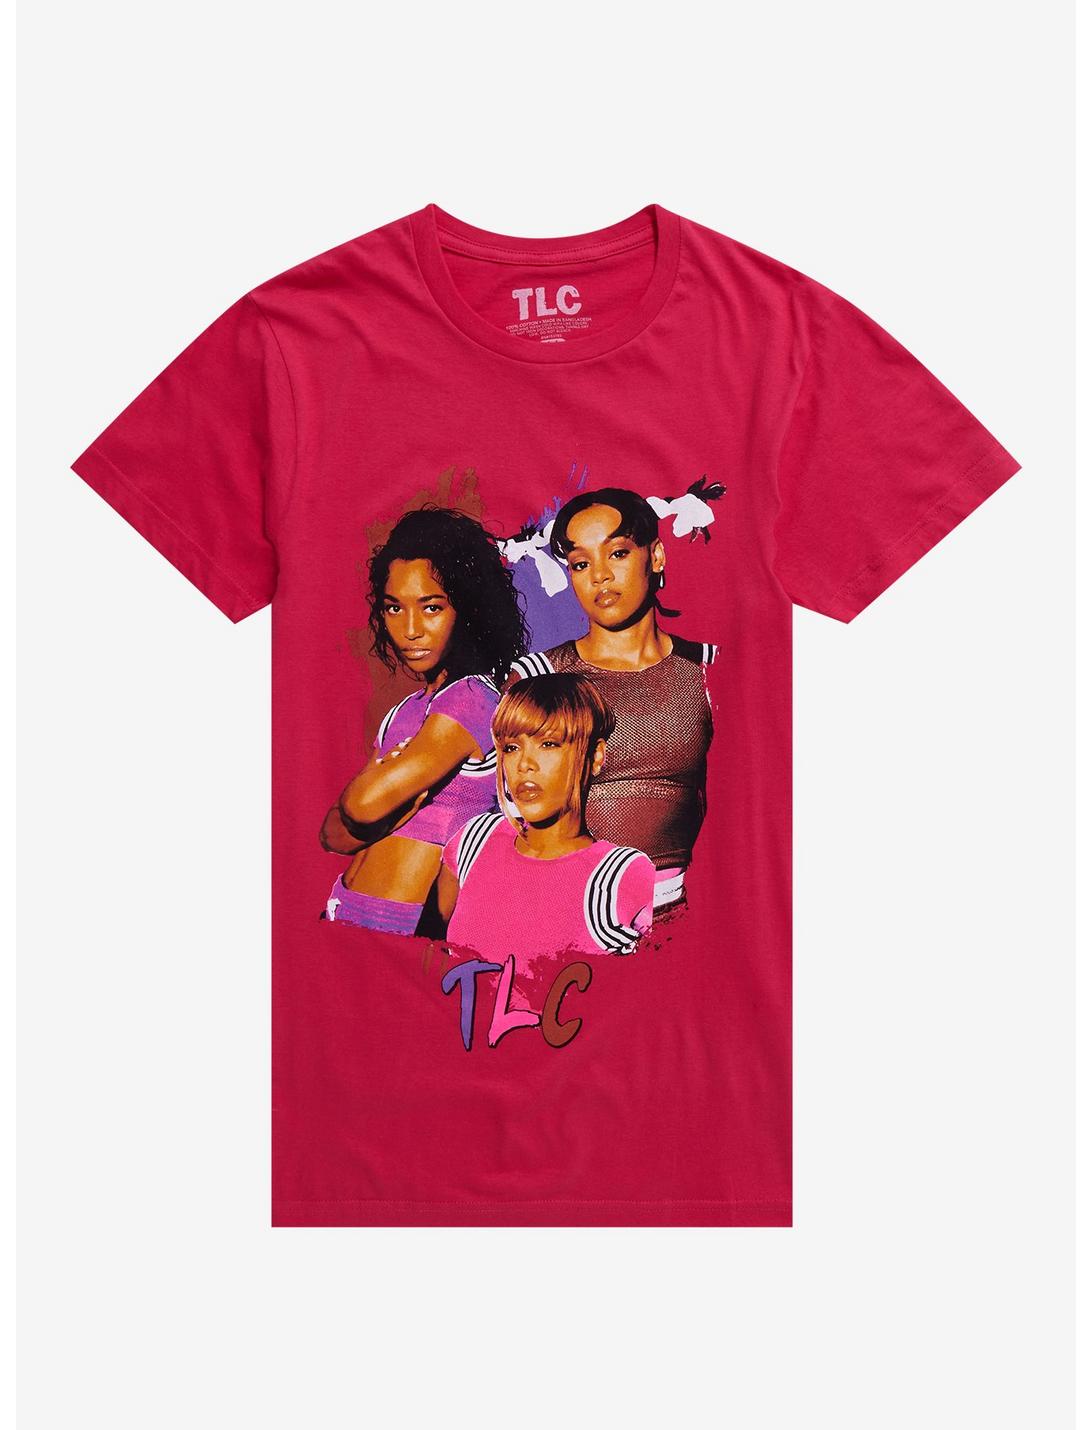 TLC Collage Boyfriend Fit Girls T-Shirt, HOT PINK, hi-res